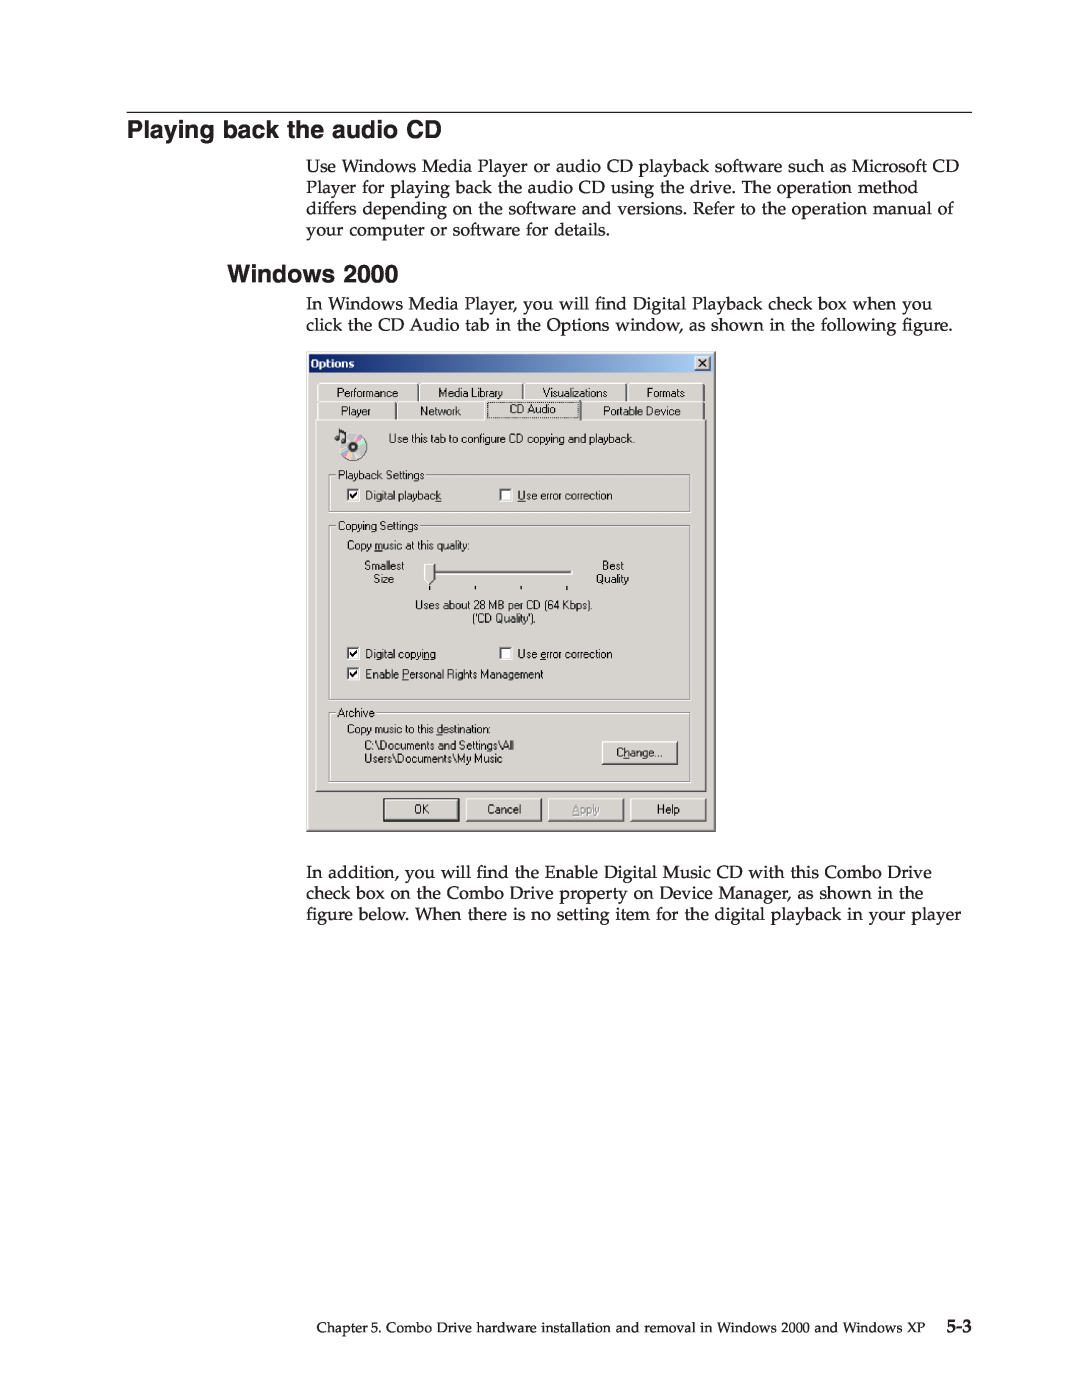 IBM 73P4518 manual Playing back the audio CD, Windows 